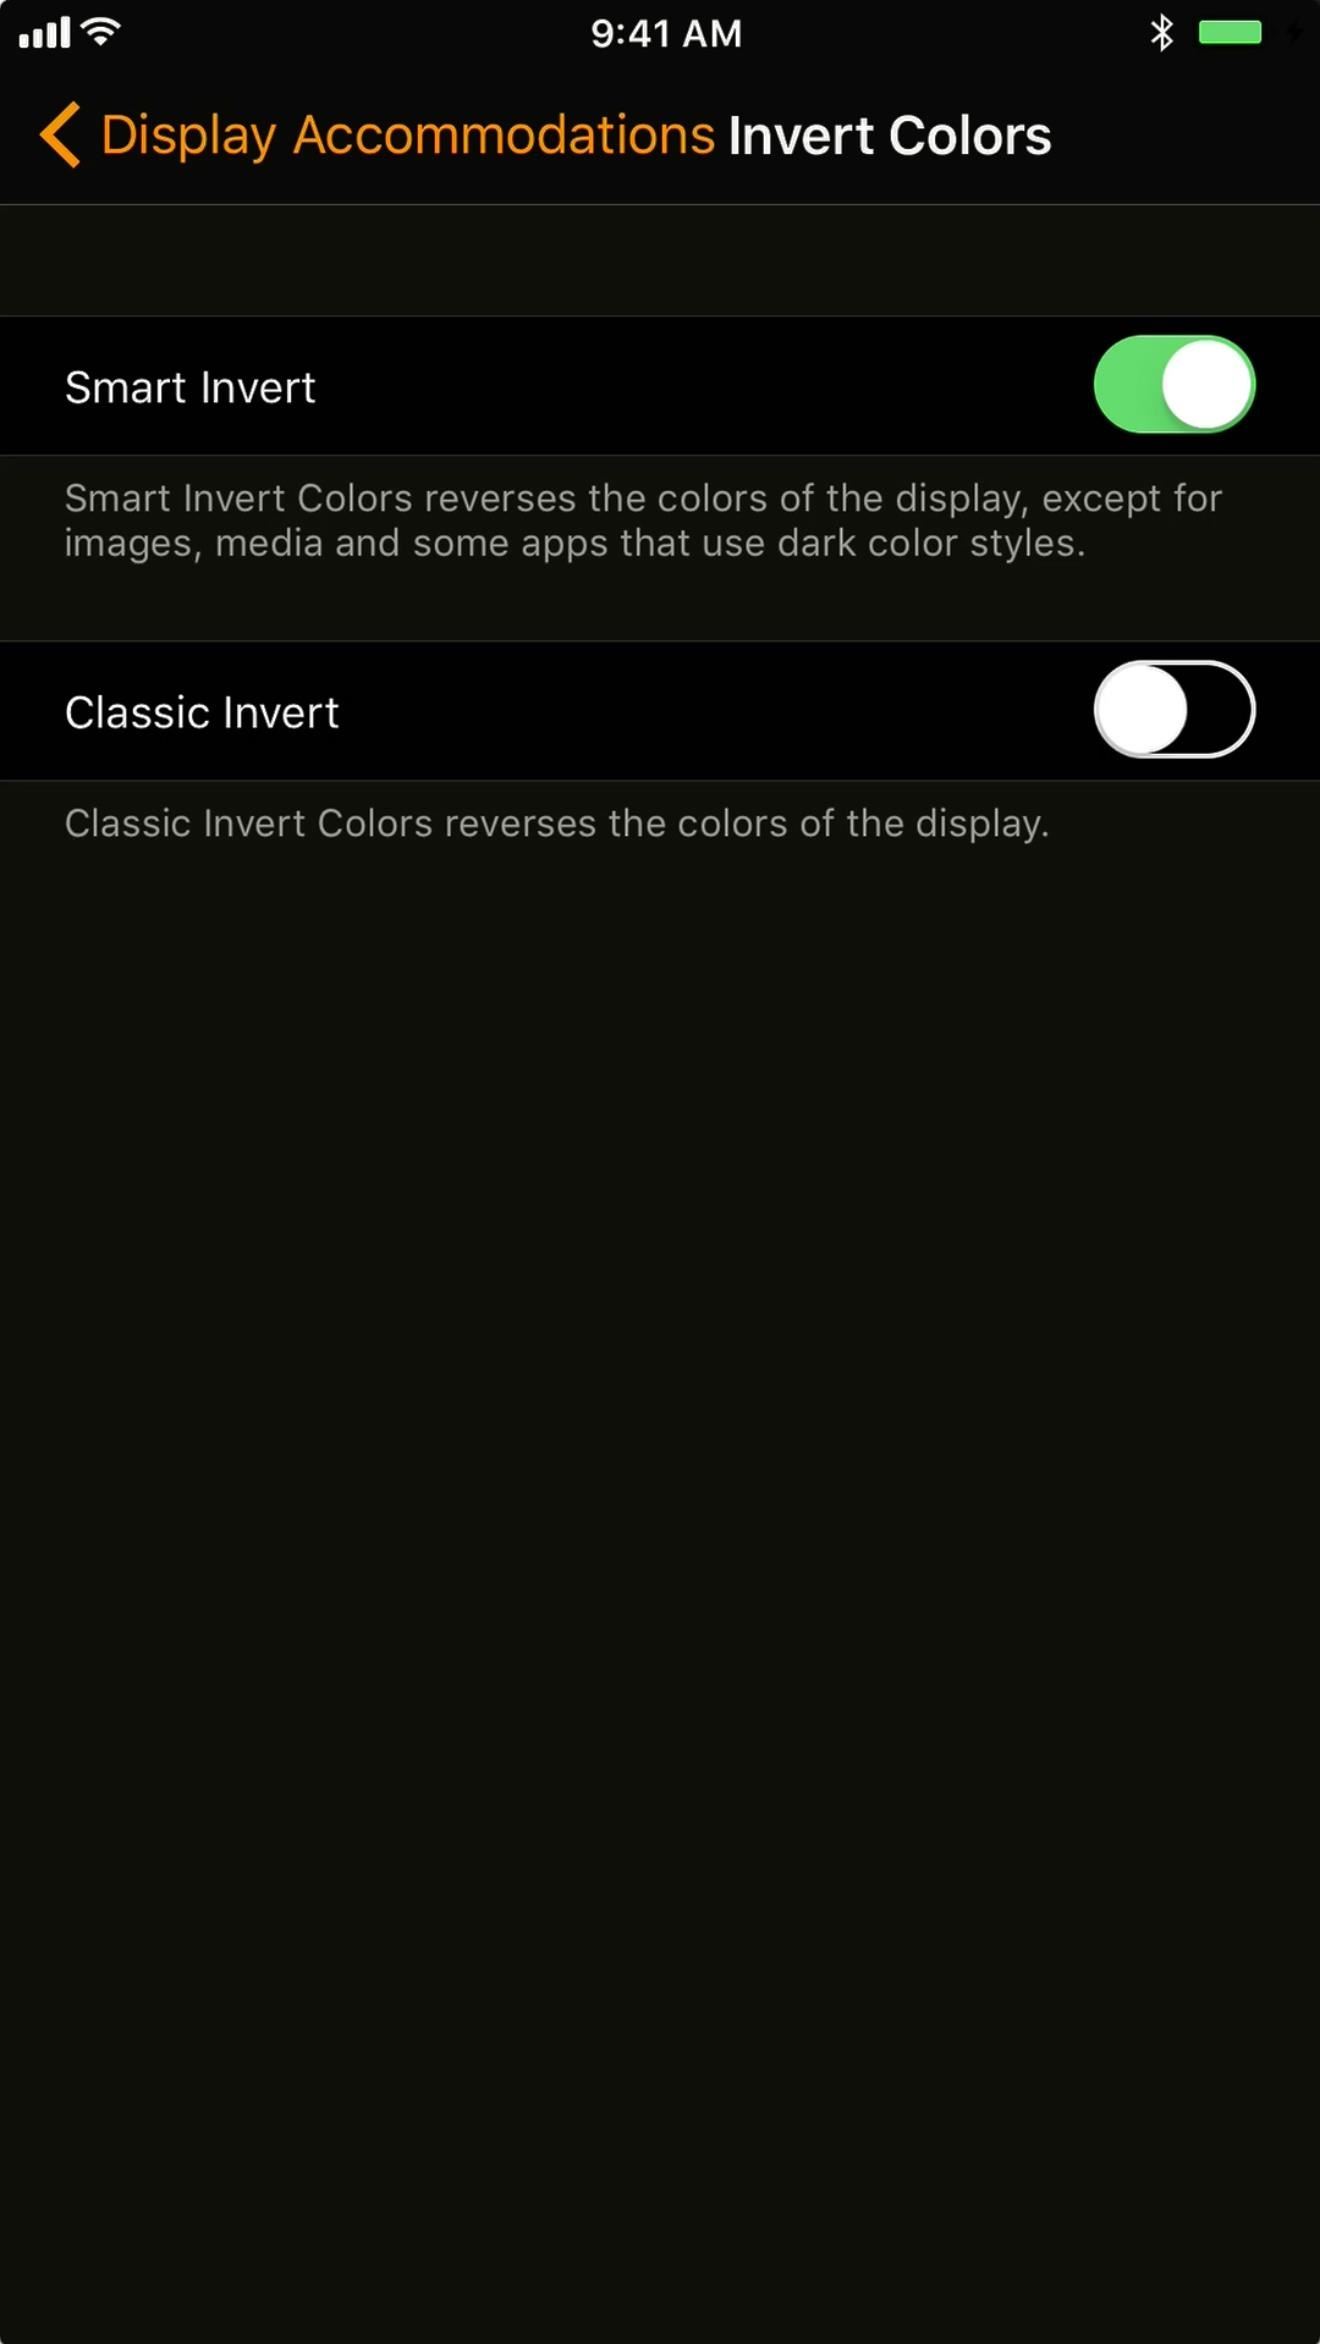 iOS 11 trás modo noturno finalmente ao iPhone, saiba como ativar 4